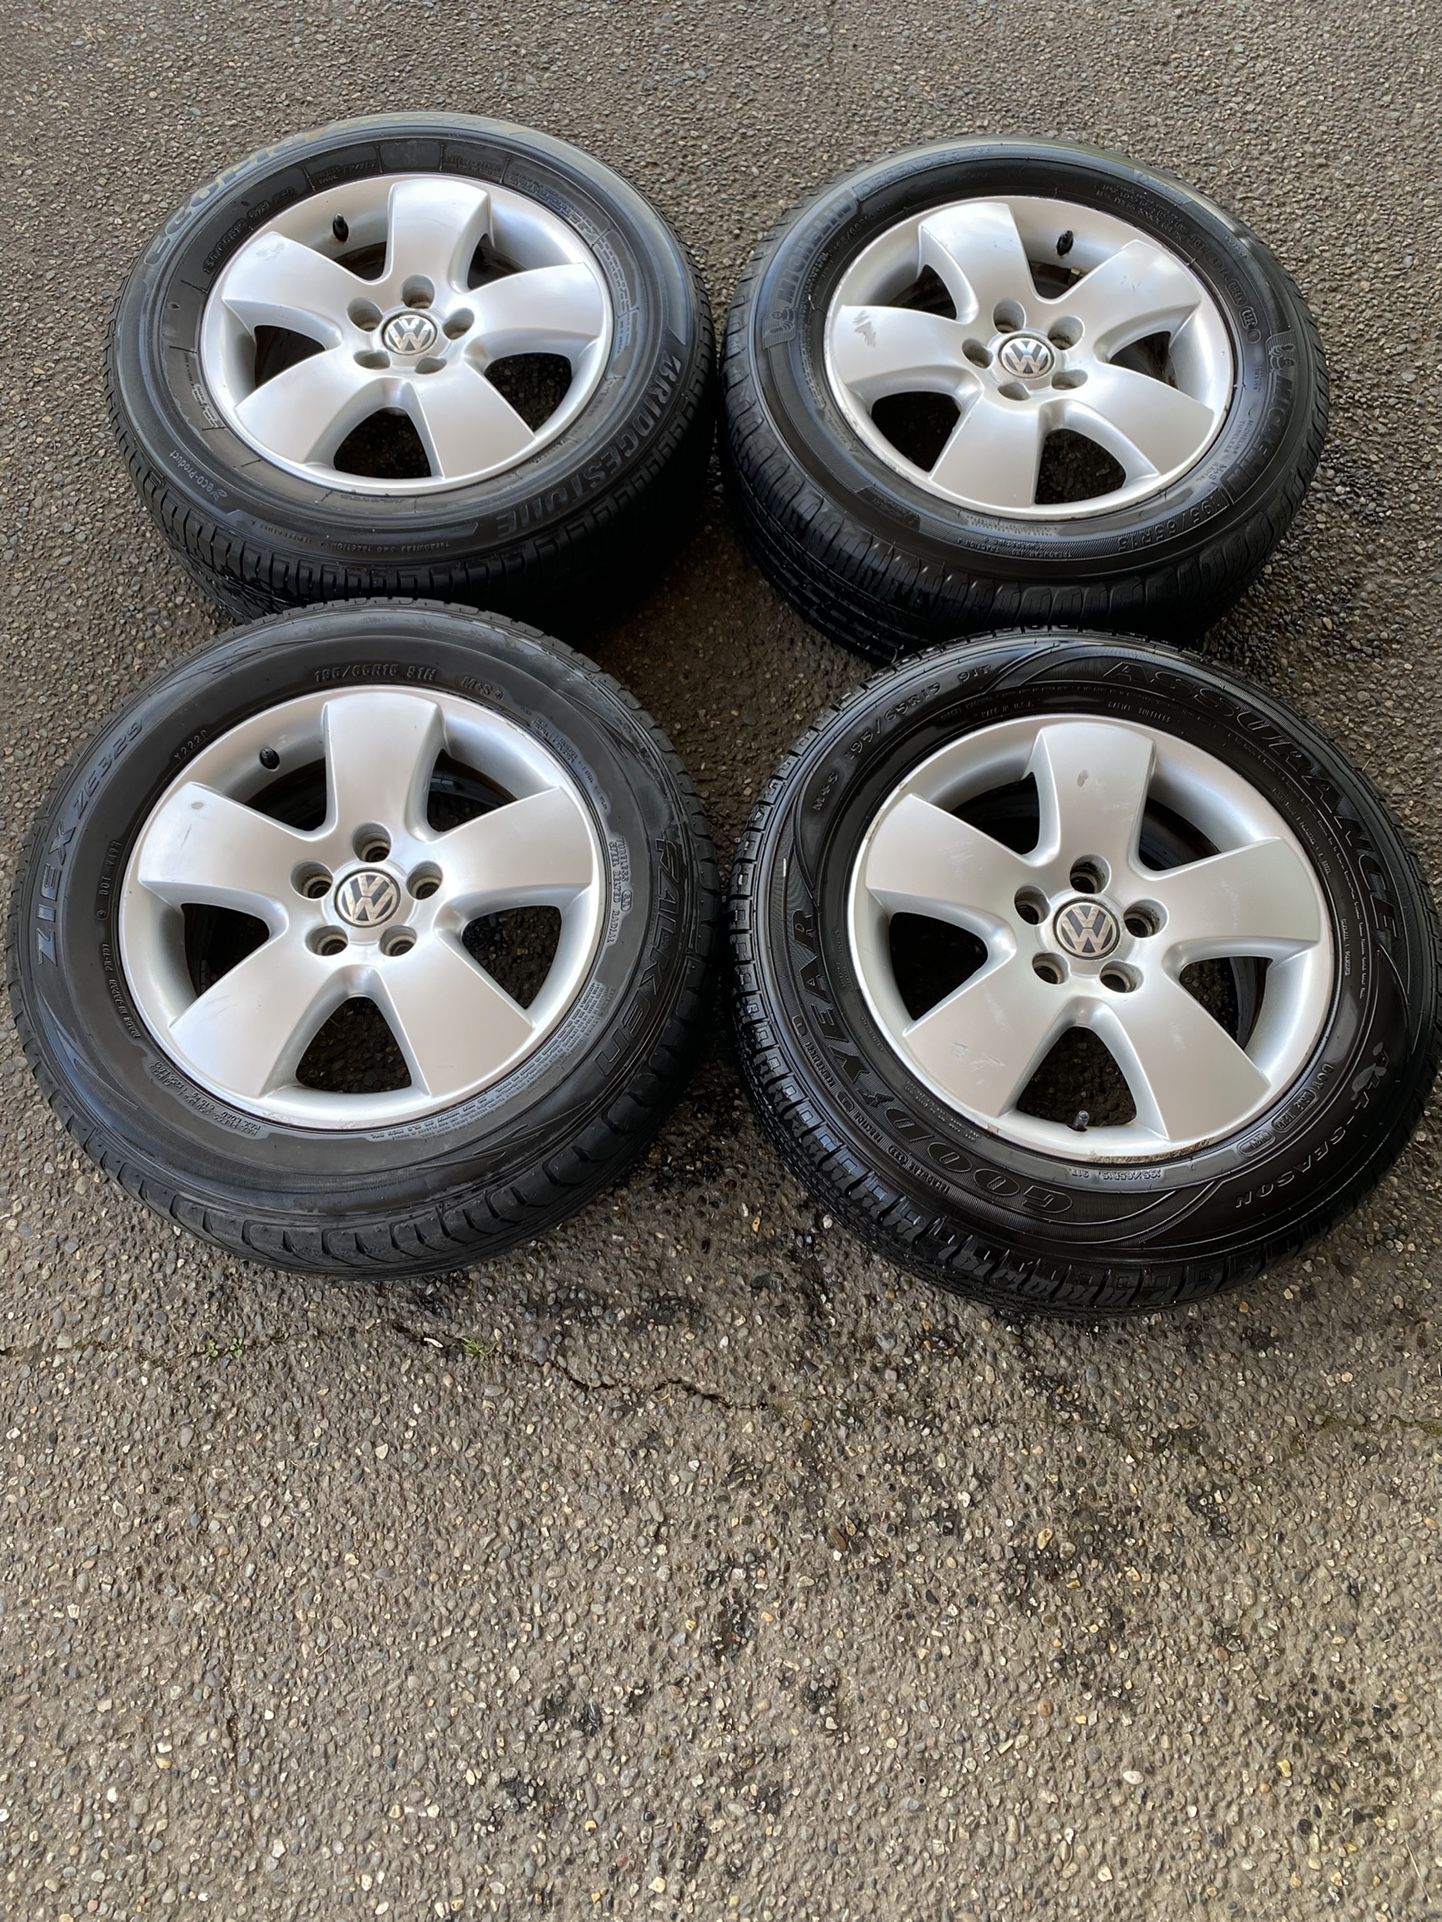 15” VW Wheels & Tires 5x100 *1 Bad Tire*